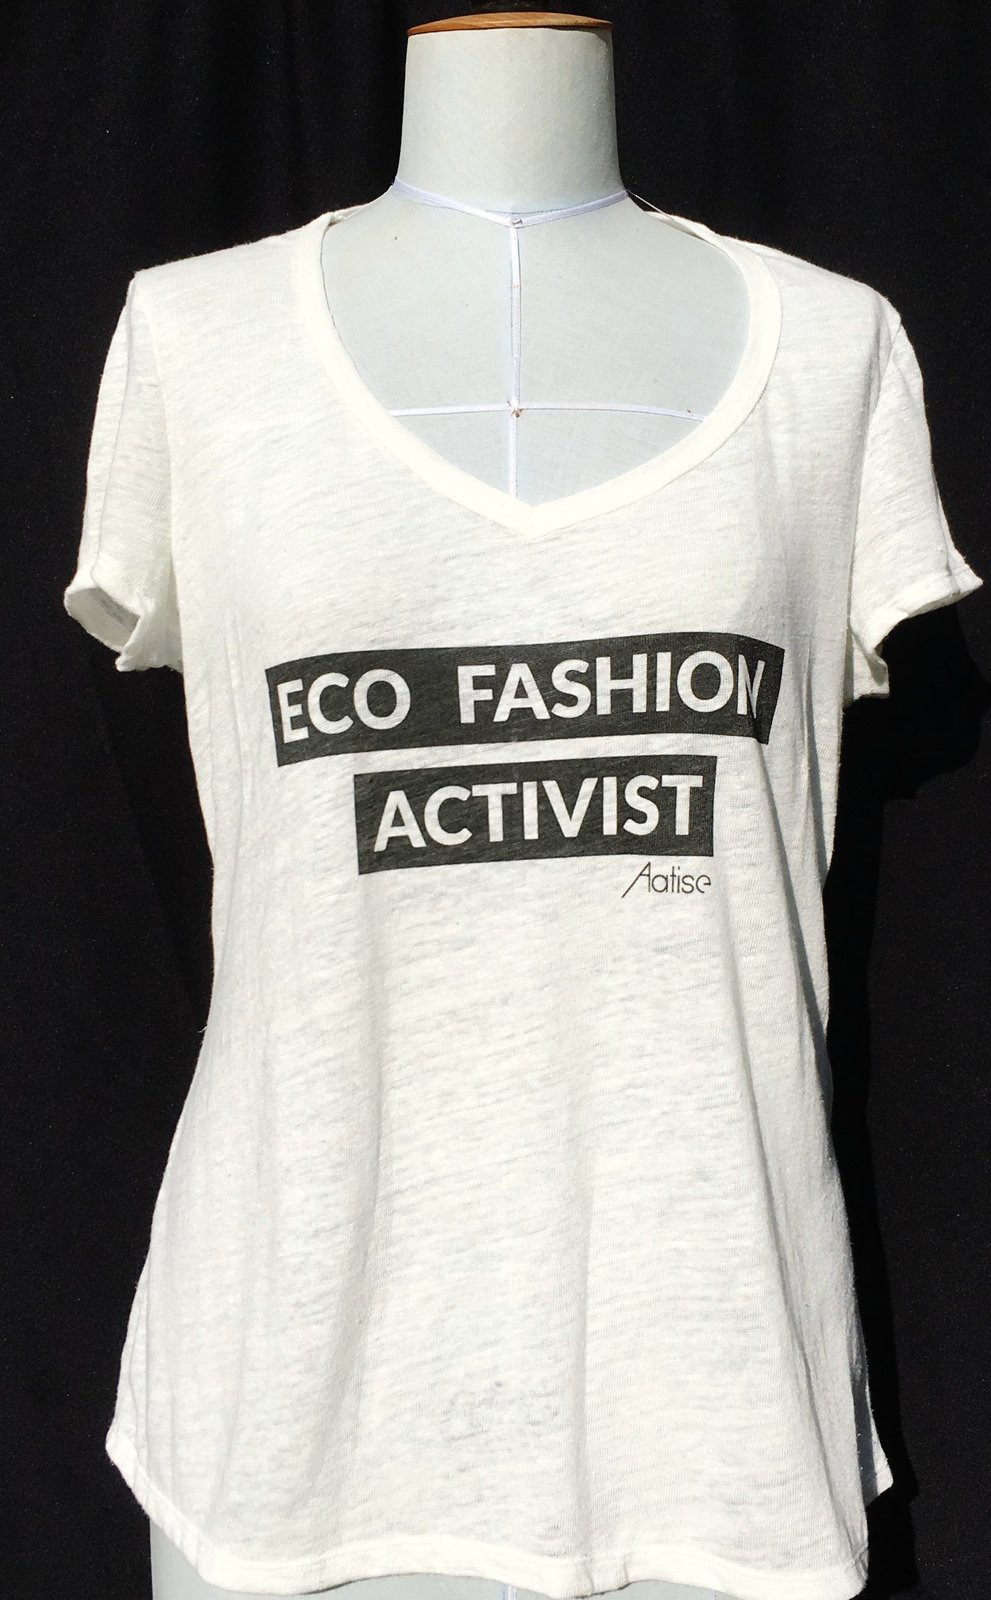 Aatise - Eco Fashion Activist